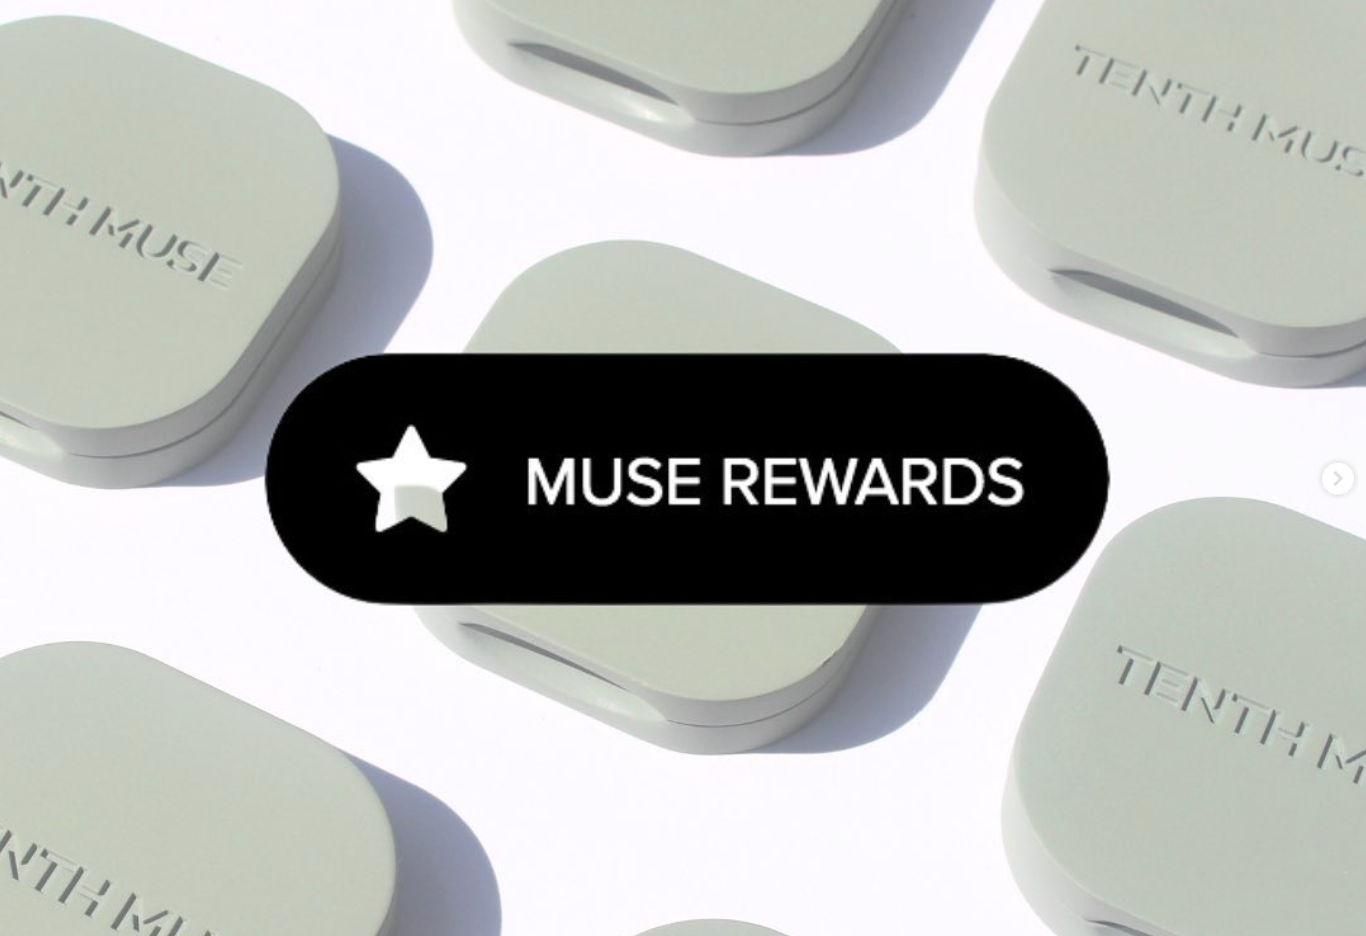 Introducing Muse Rewards!